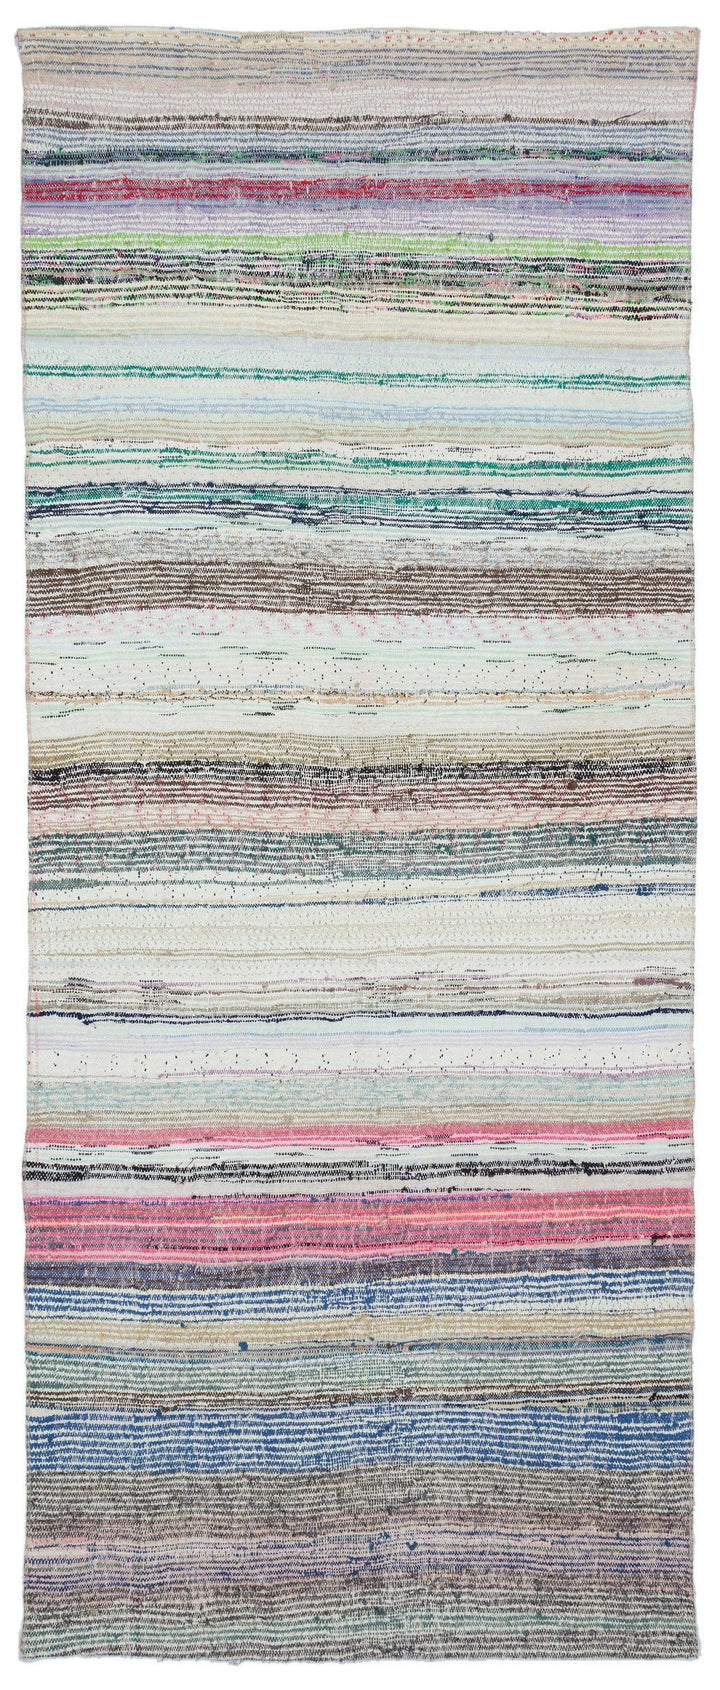 Cretan Beige Striped Wool Hand Woven Carpet 129 x 305